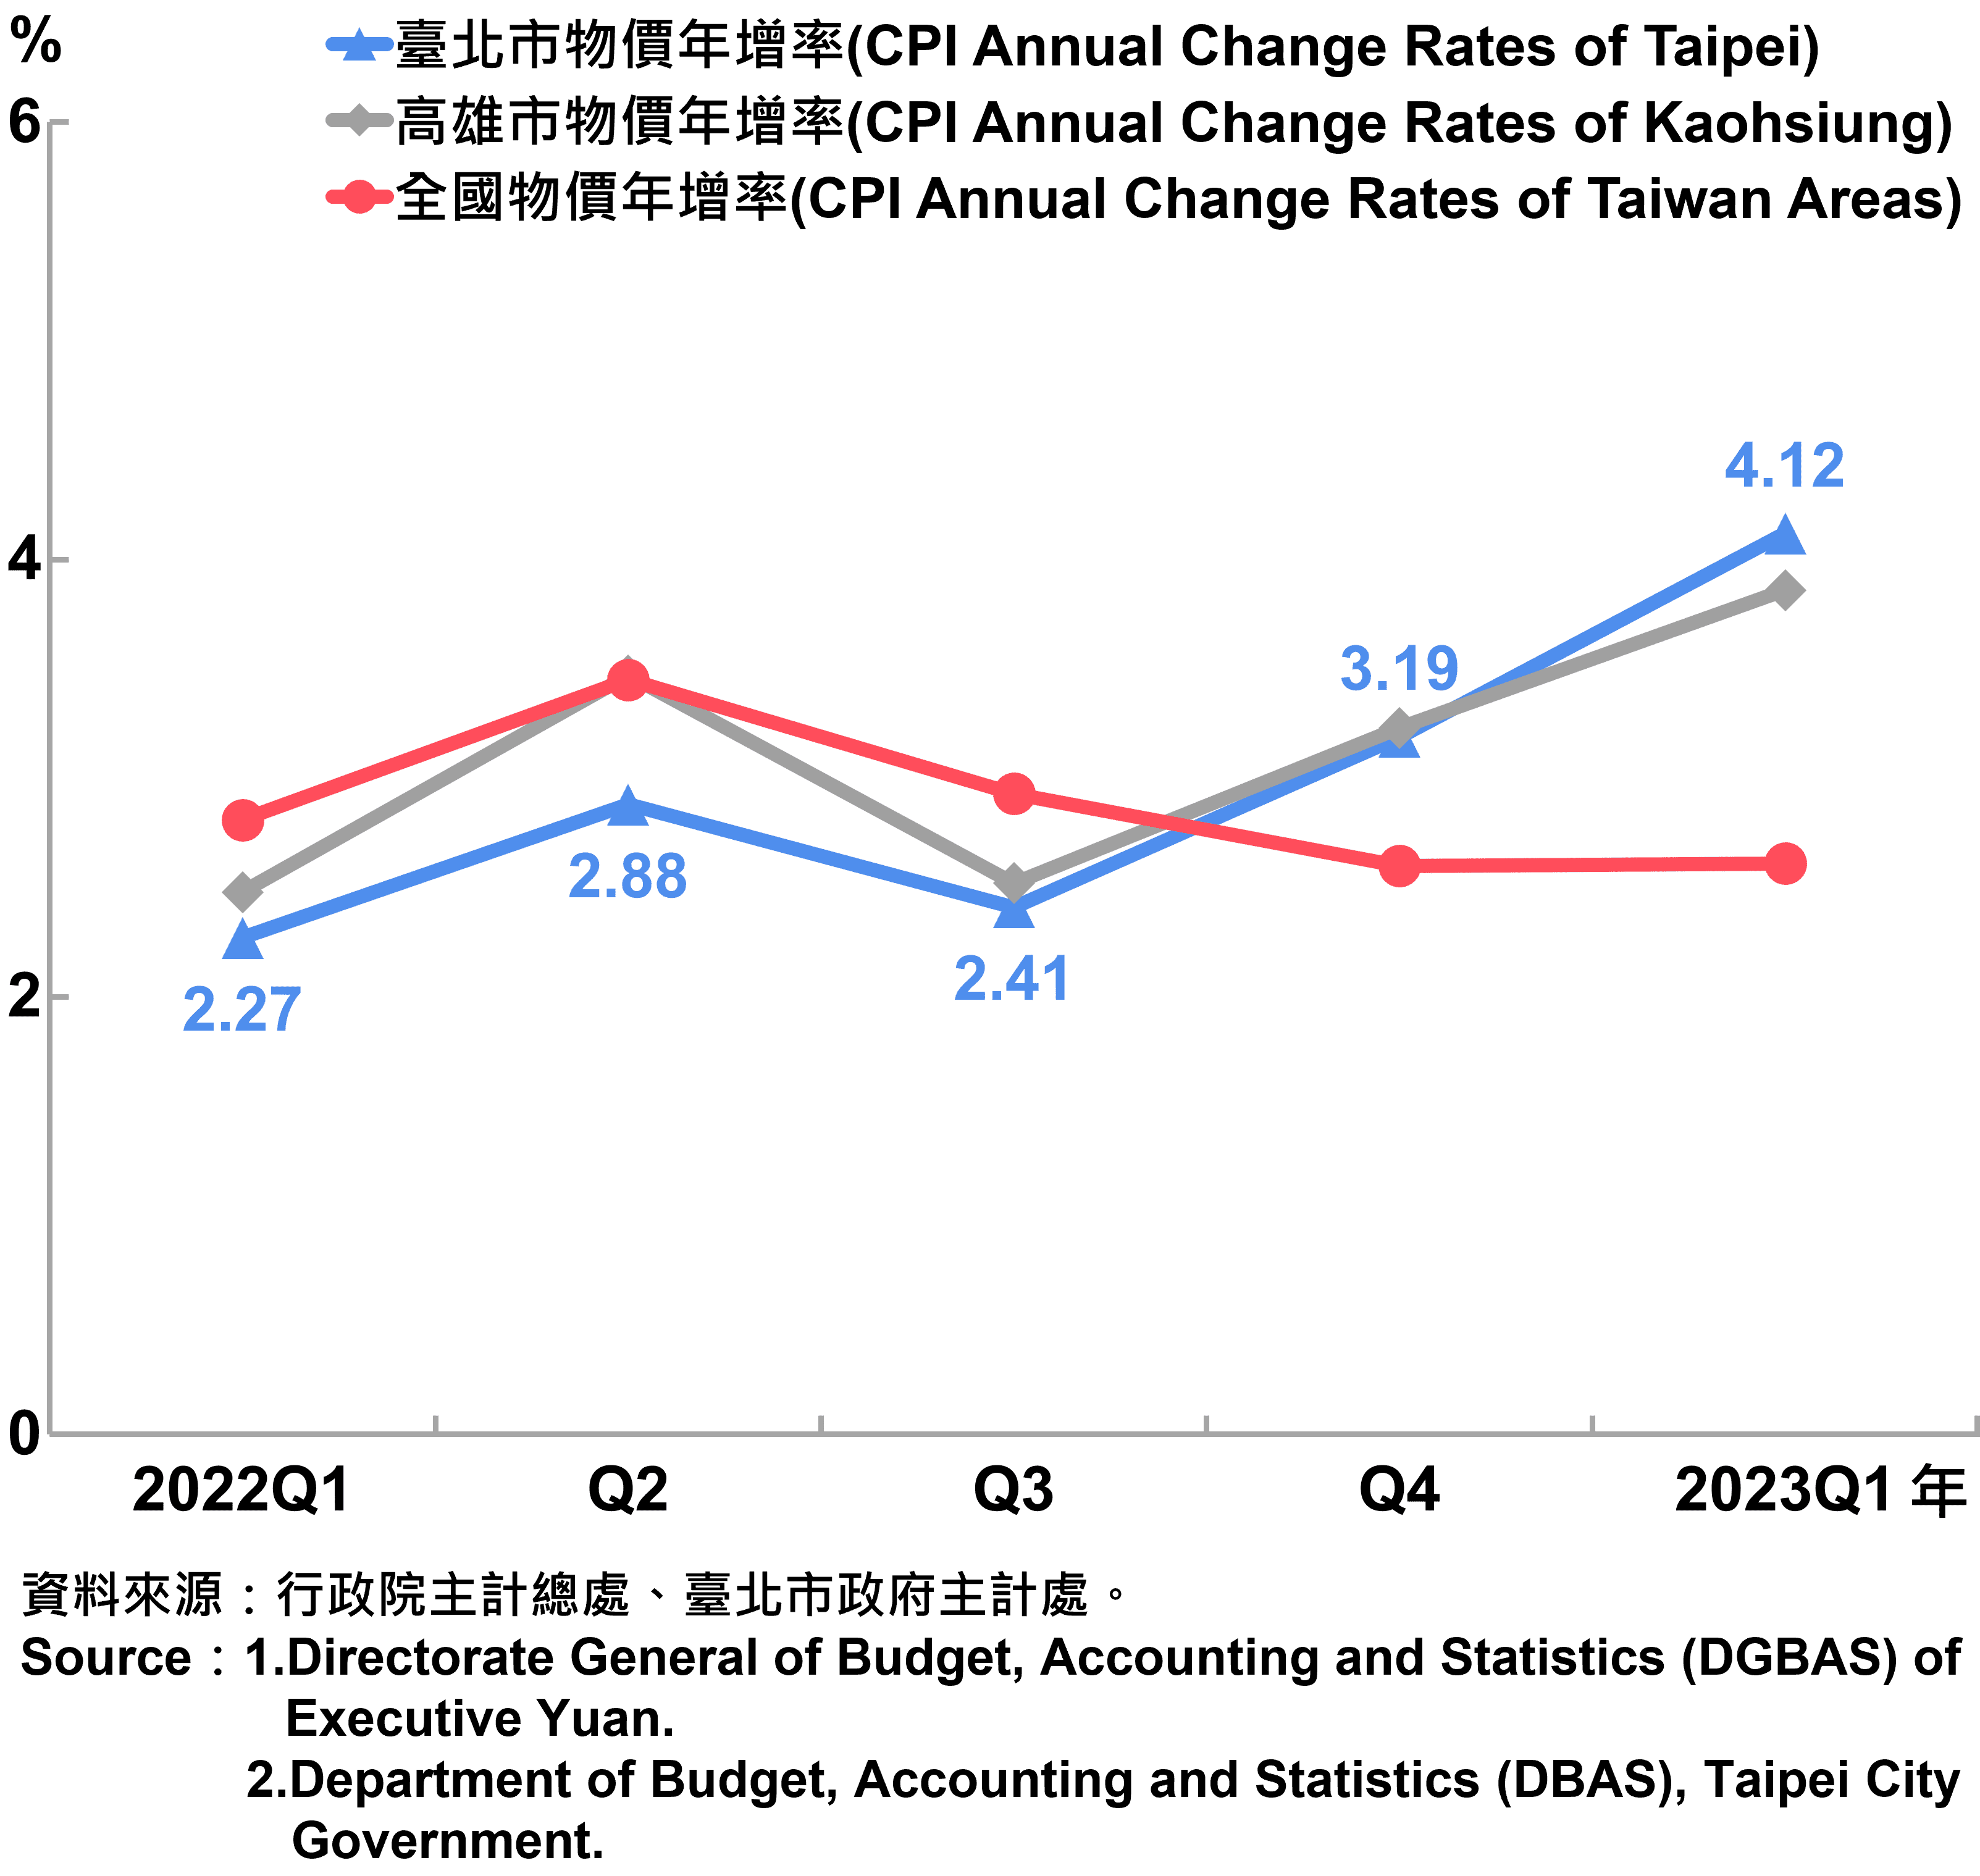 臺北市消費者物價指數（CPI）年增率—2023Q1 Annual Growth Rate of CPI in Taipei City—2023Q1